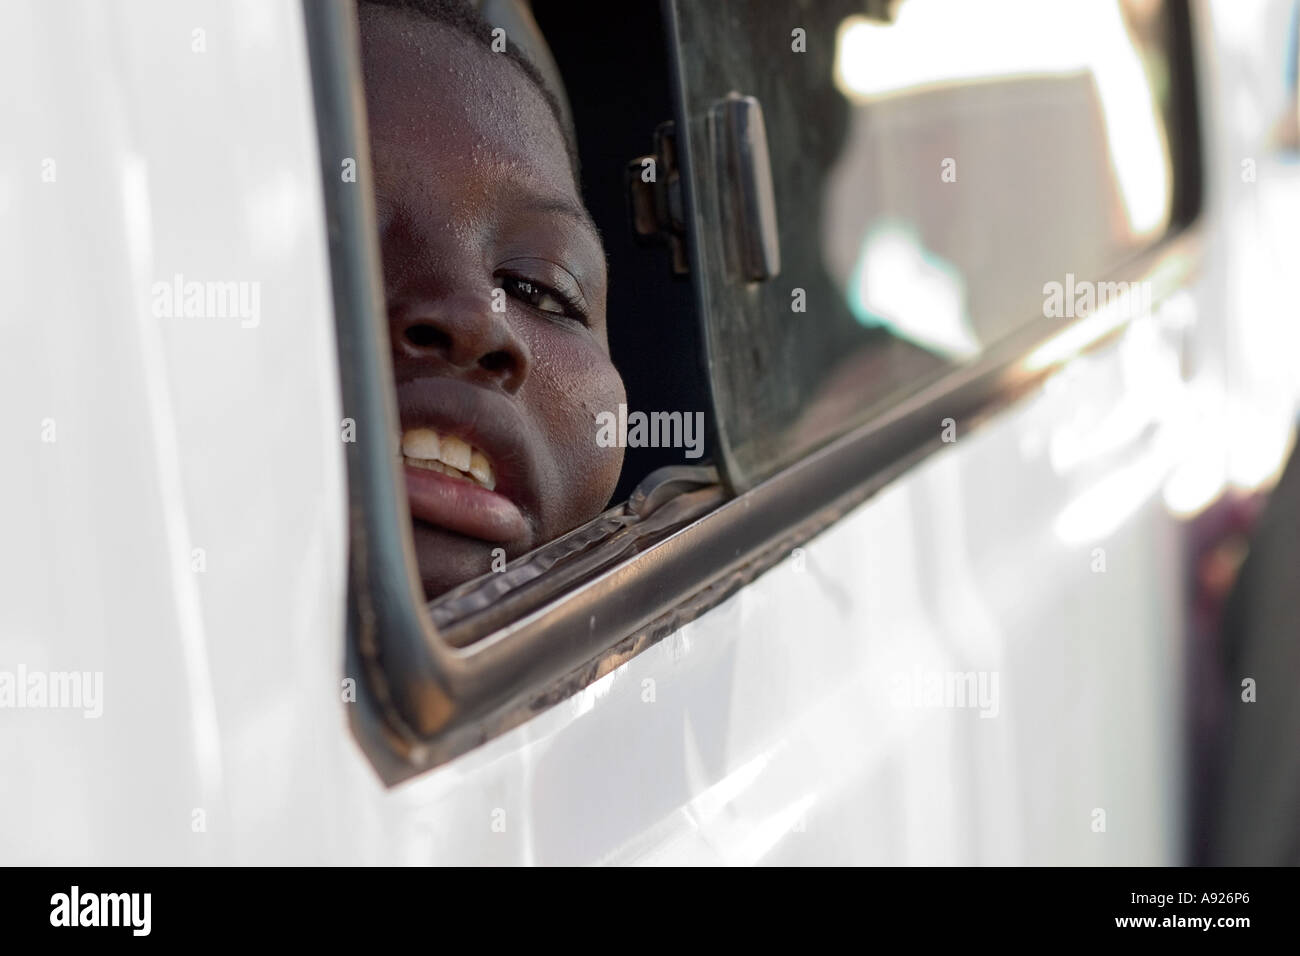 Boy peeking out car window Ghana West Africa Stock Photo